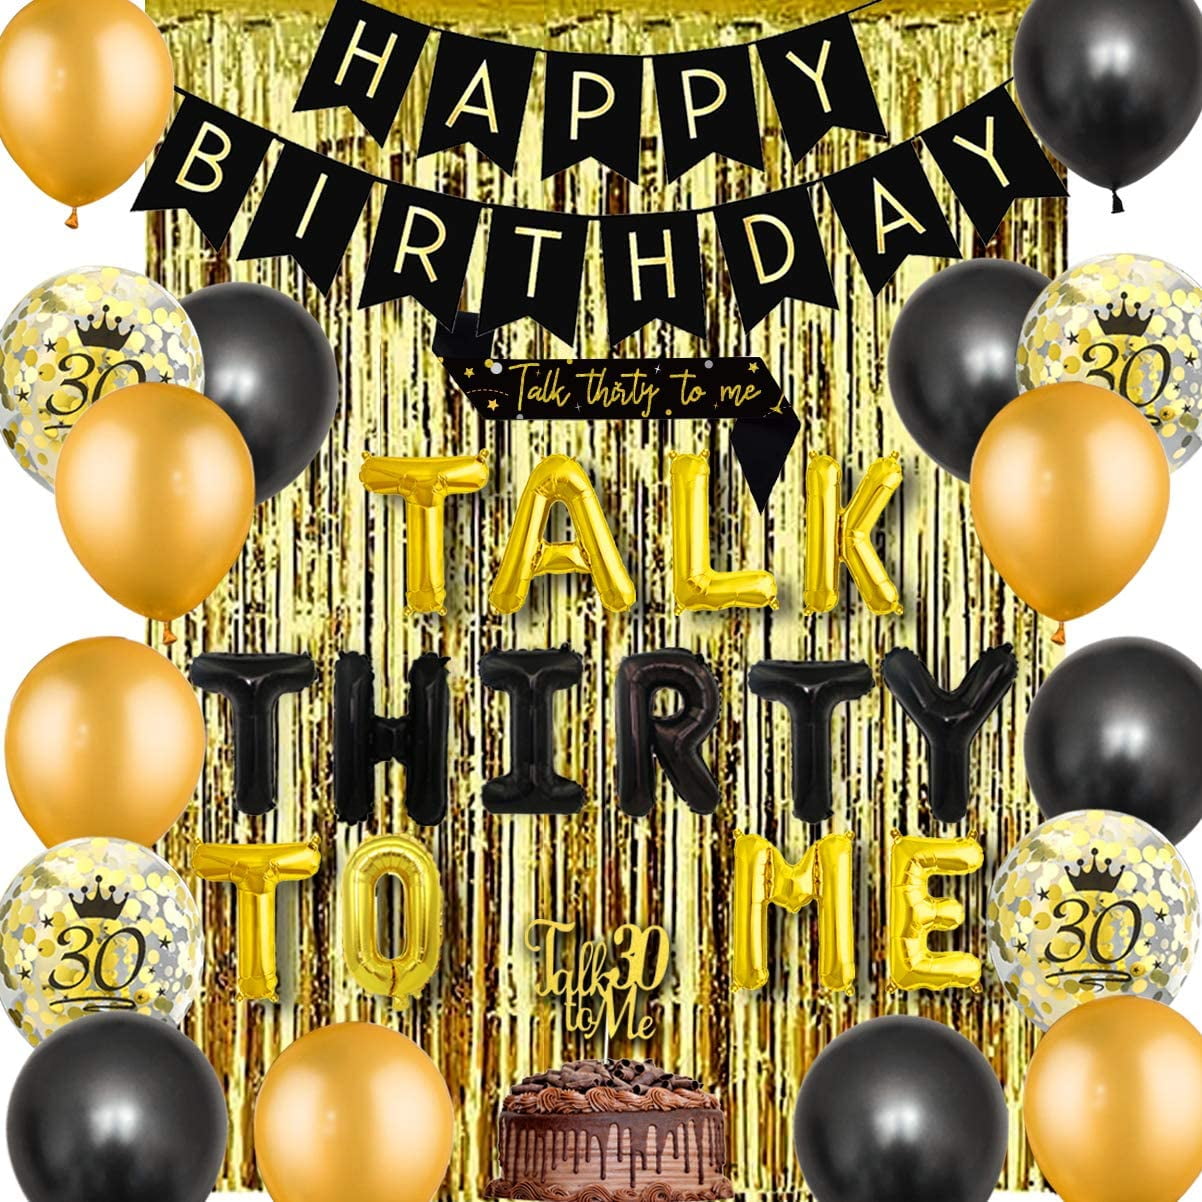 Black Happy Birthday Party Decorations, 30 Birthday Balloon, Sash Banner,  Cake Decor for Man and Woman, So Happy I'm Takes 30, 2 - AliExpress